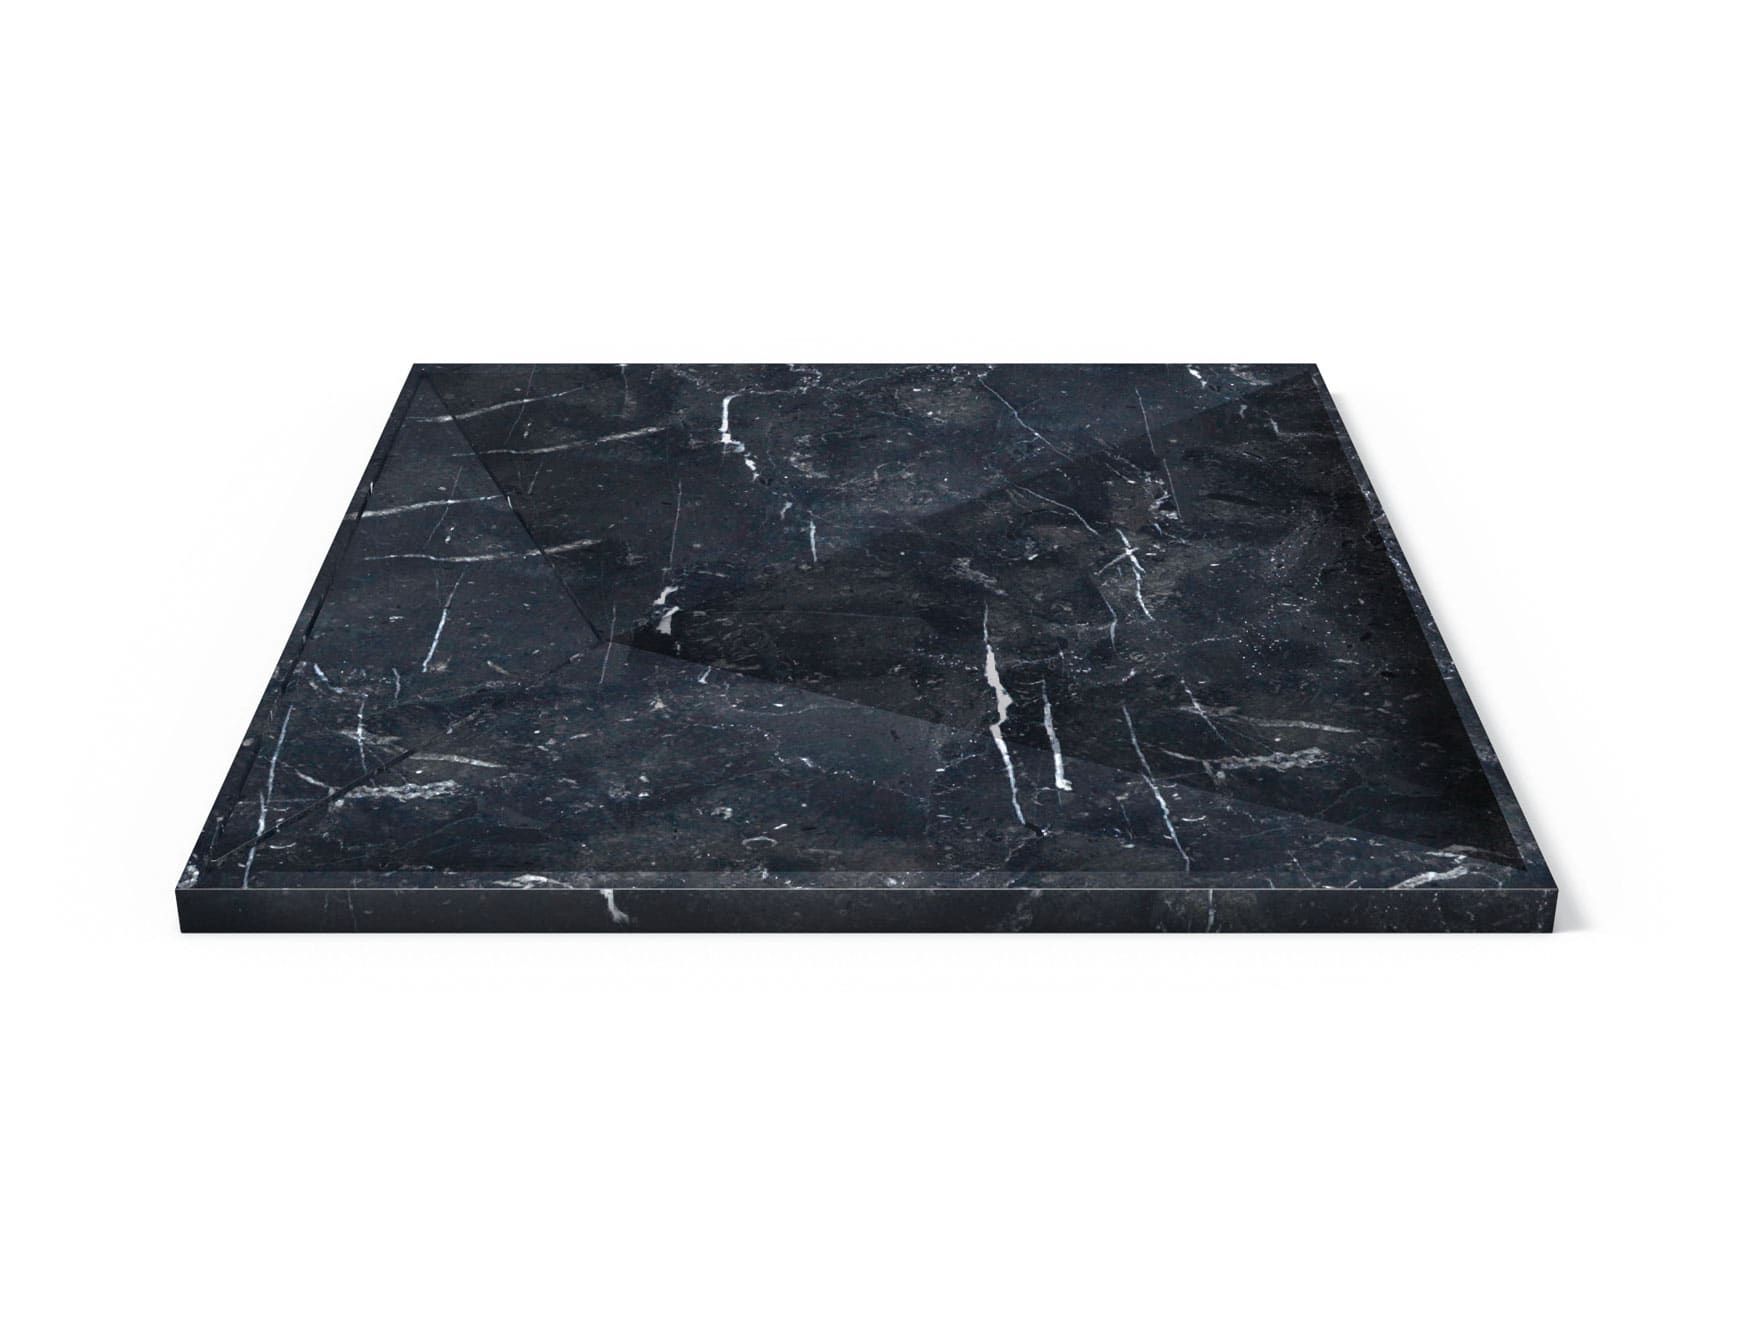 Entity Punta contemporary Italian shower tray with black Nero Marquina marble